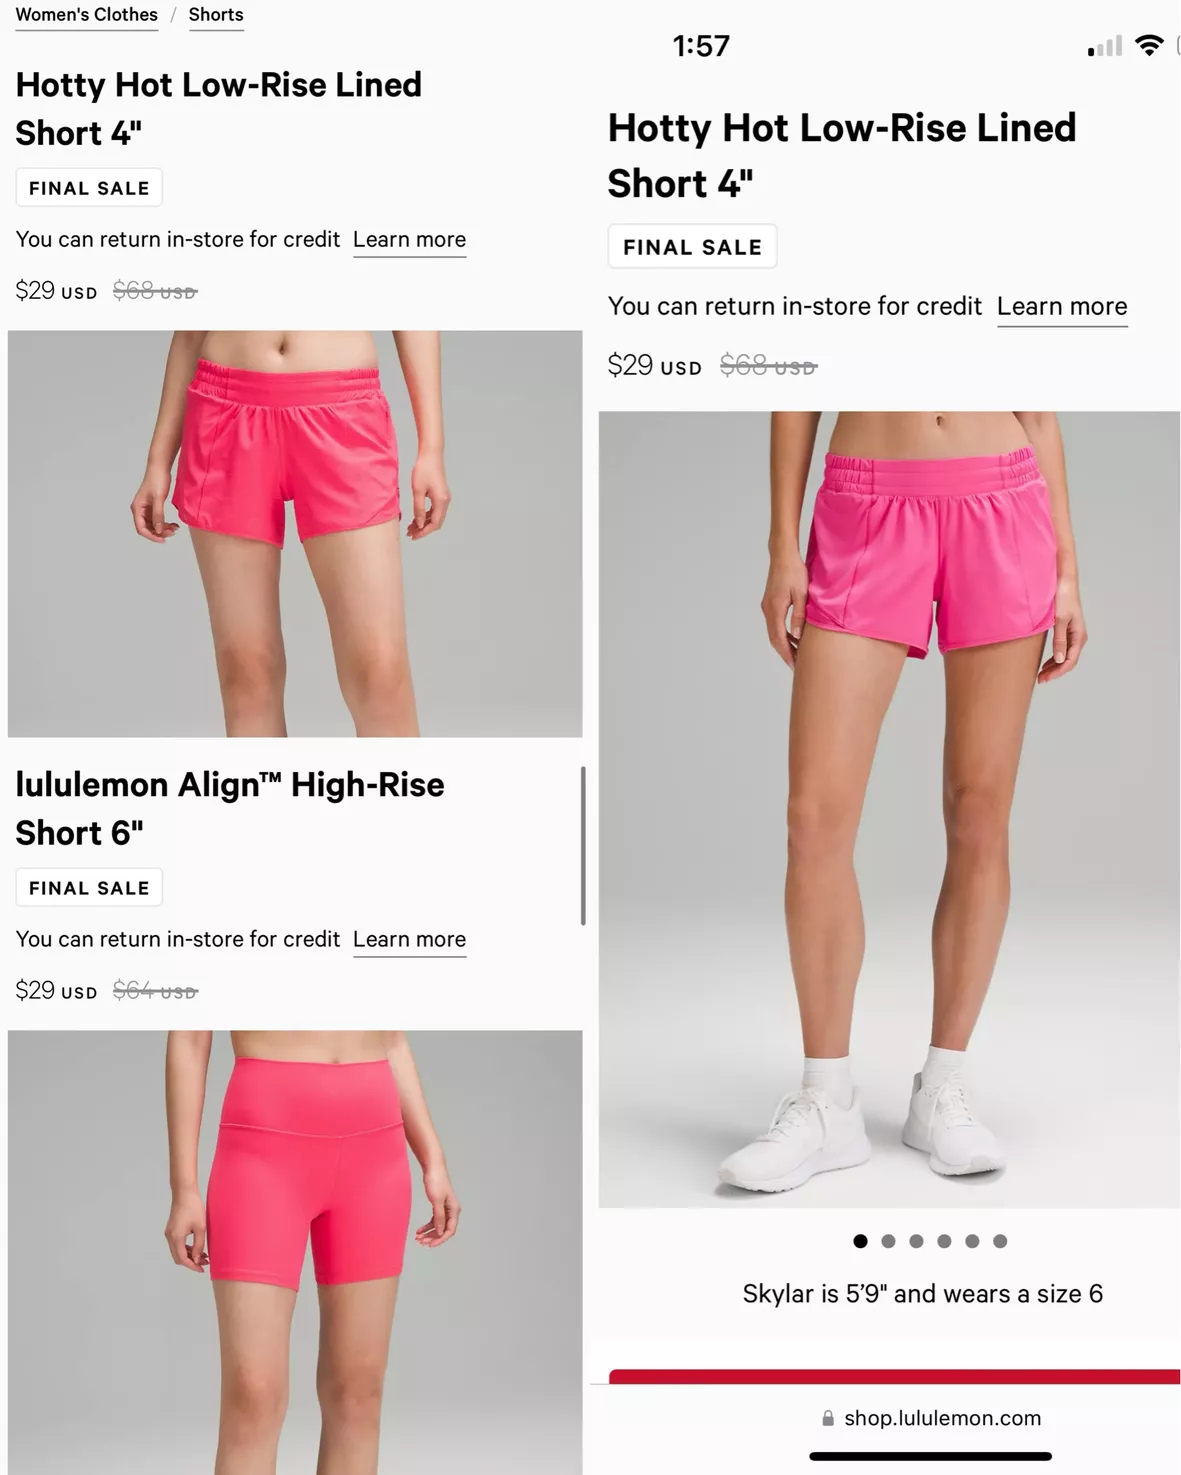 Women's Hotty Hot Shorts